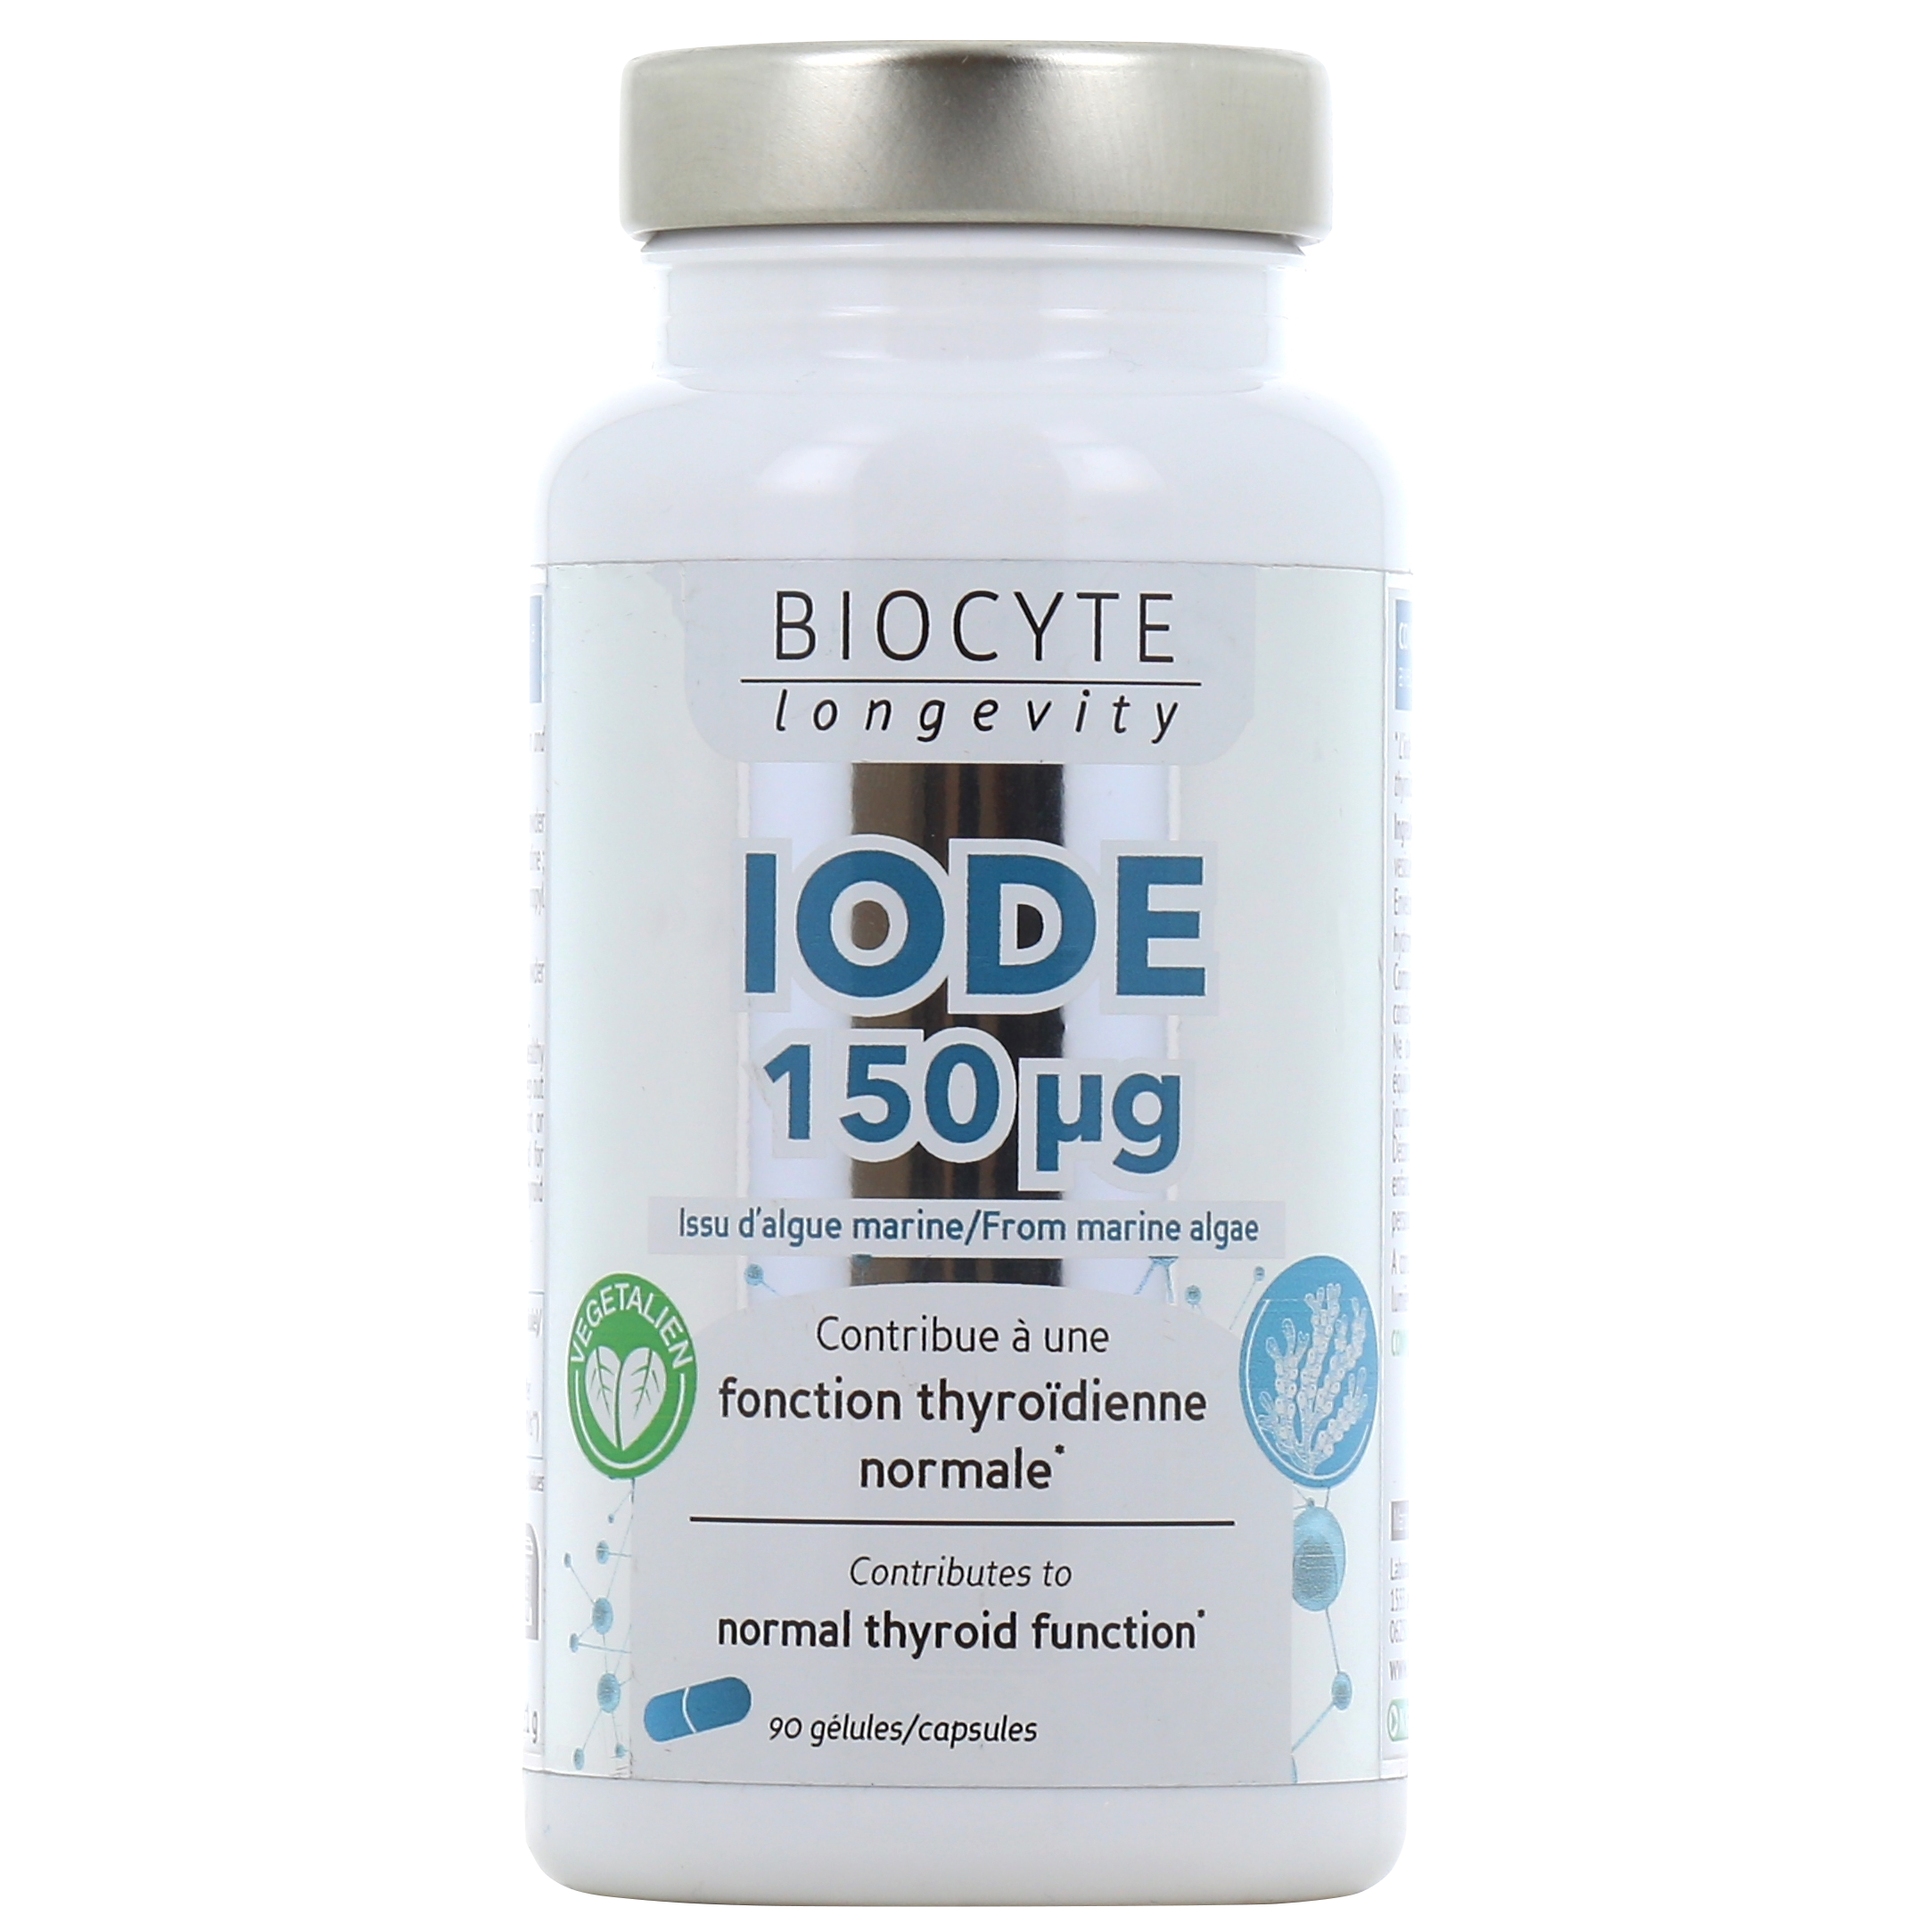 Biocyte Longevity Iode 150 µg - Fonction Thyroïdienne Normale